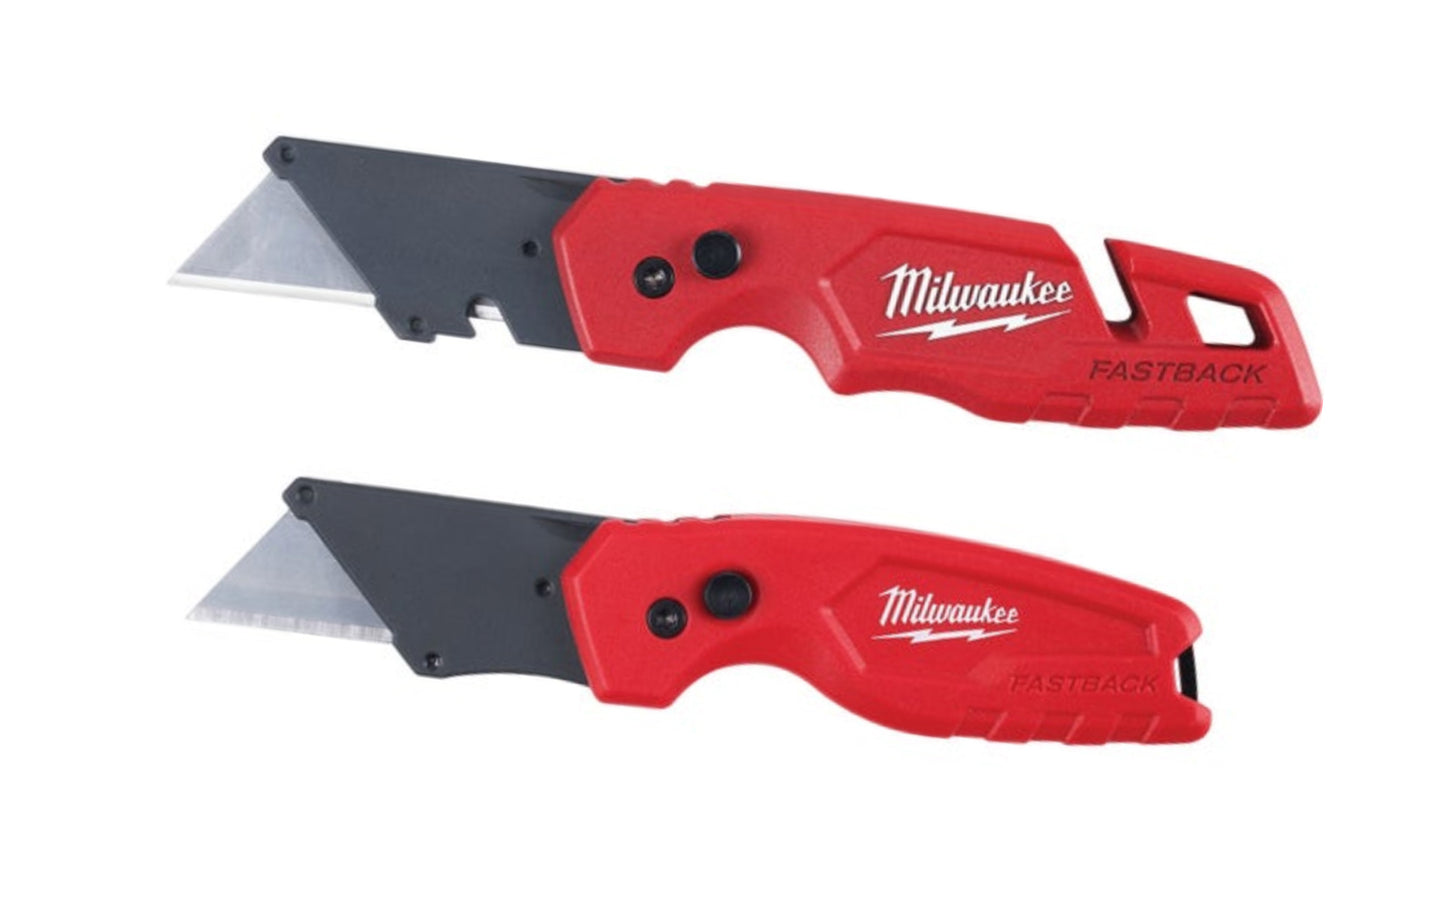 Milwaukee "Fastback" Folding Utility Knife - 2 Pack